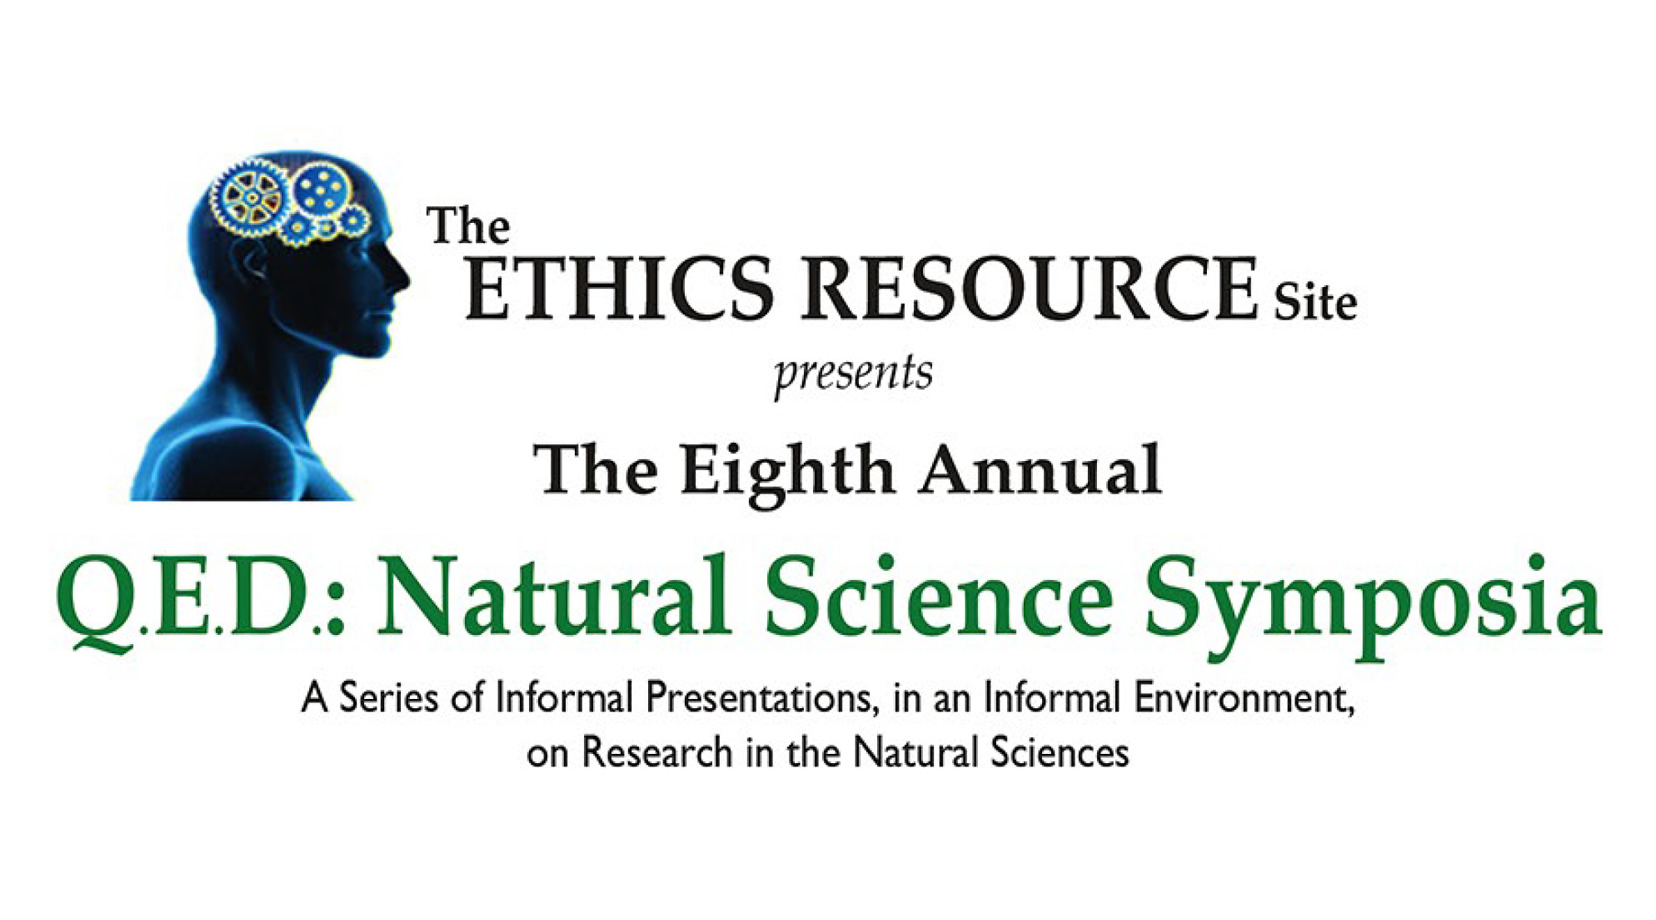 2017 Q.E.D. Natural Science Symposia Series